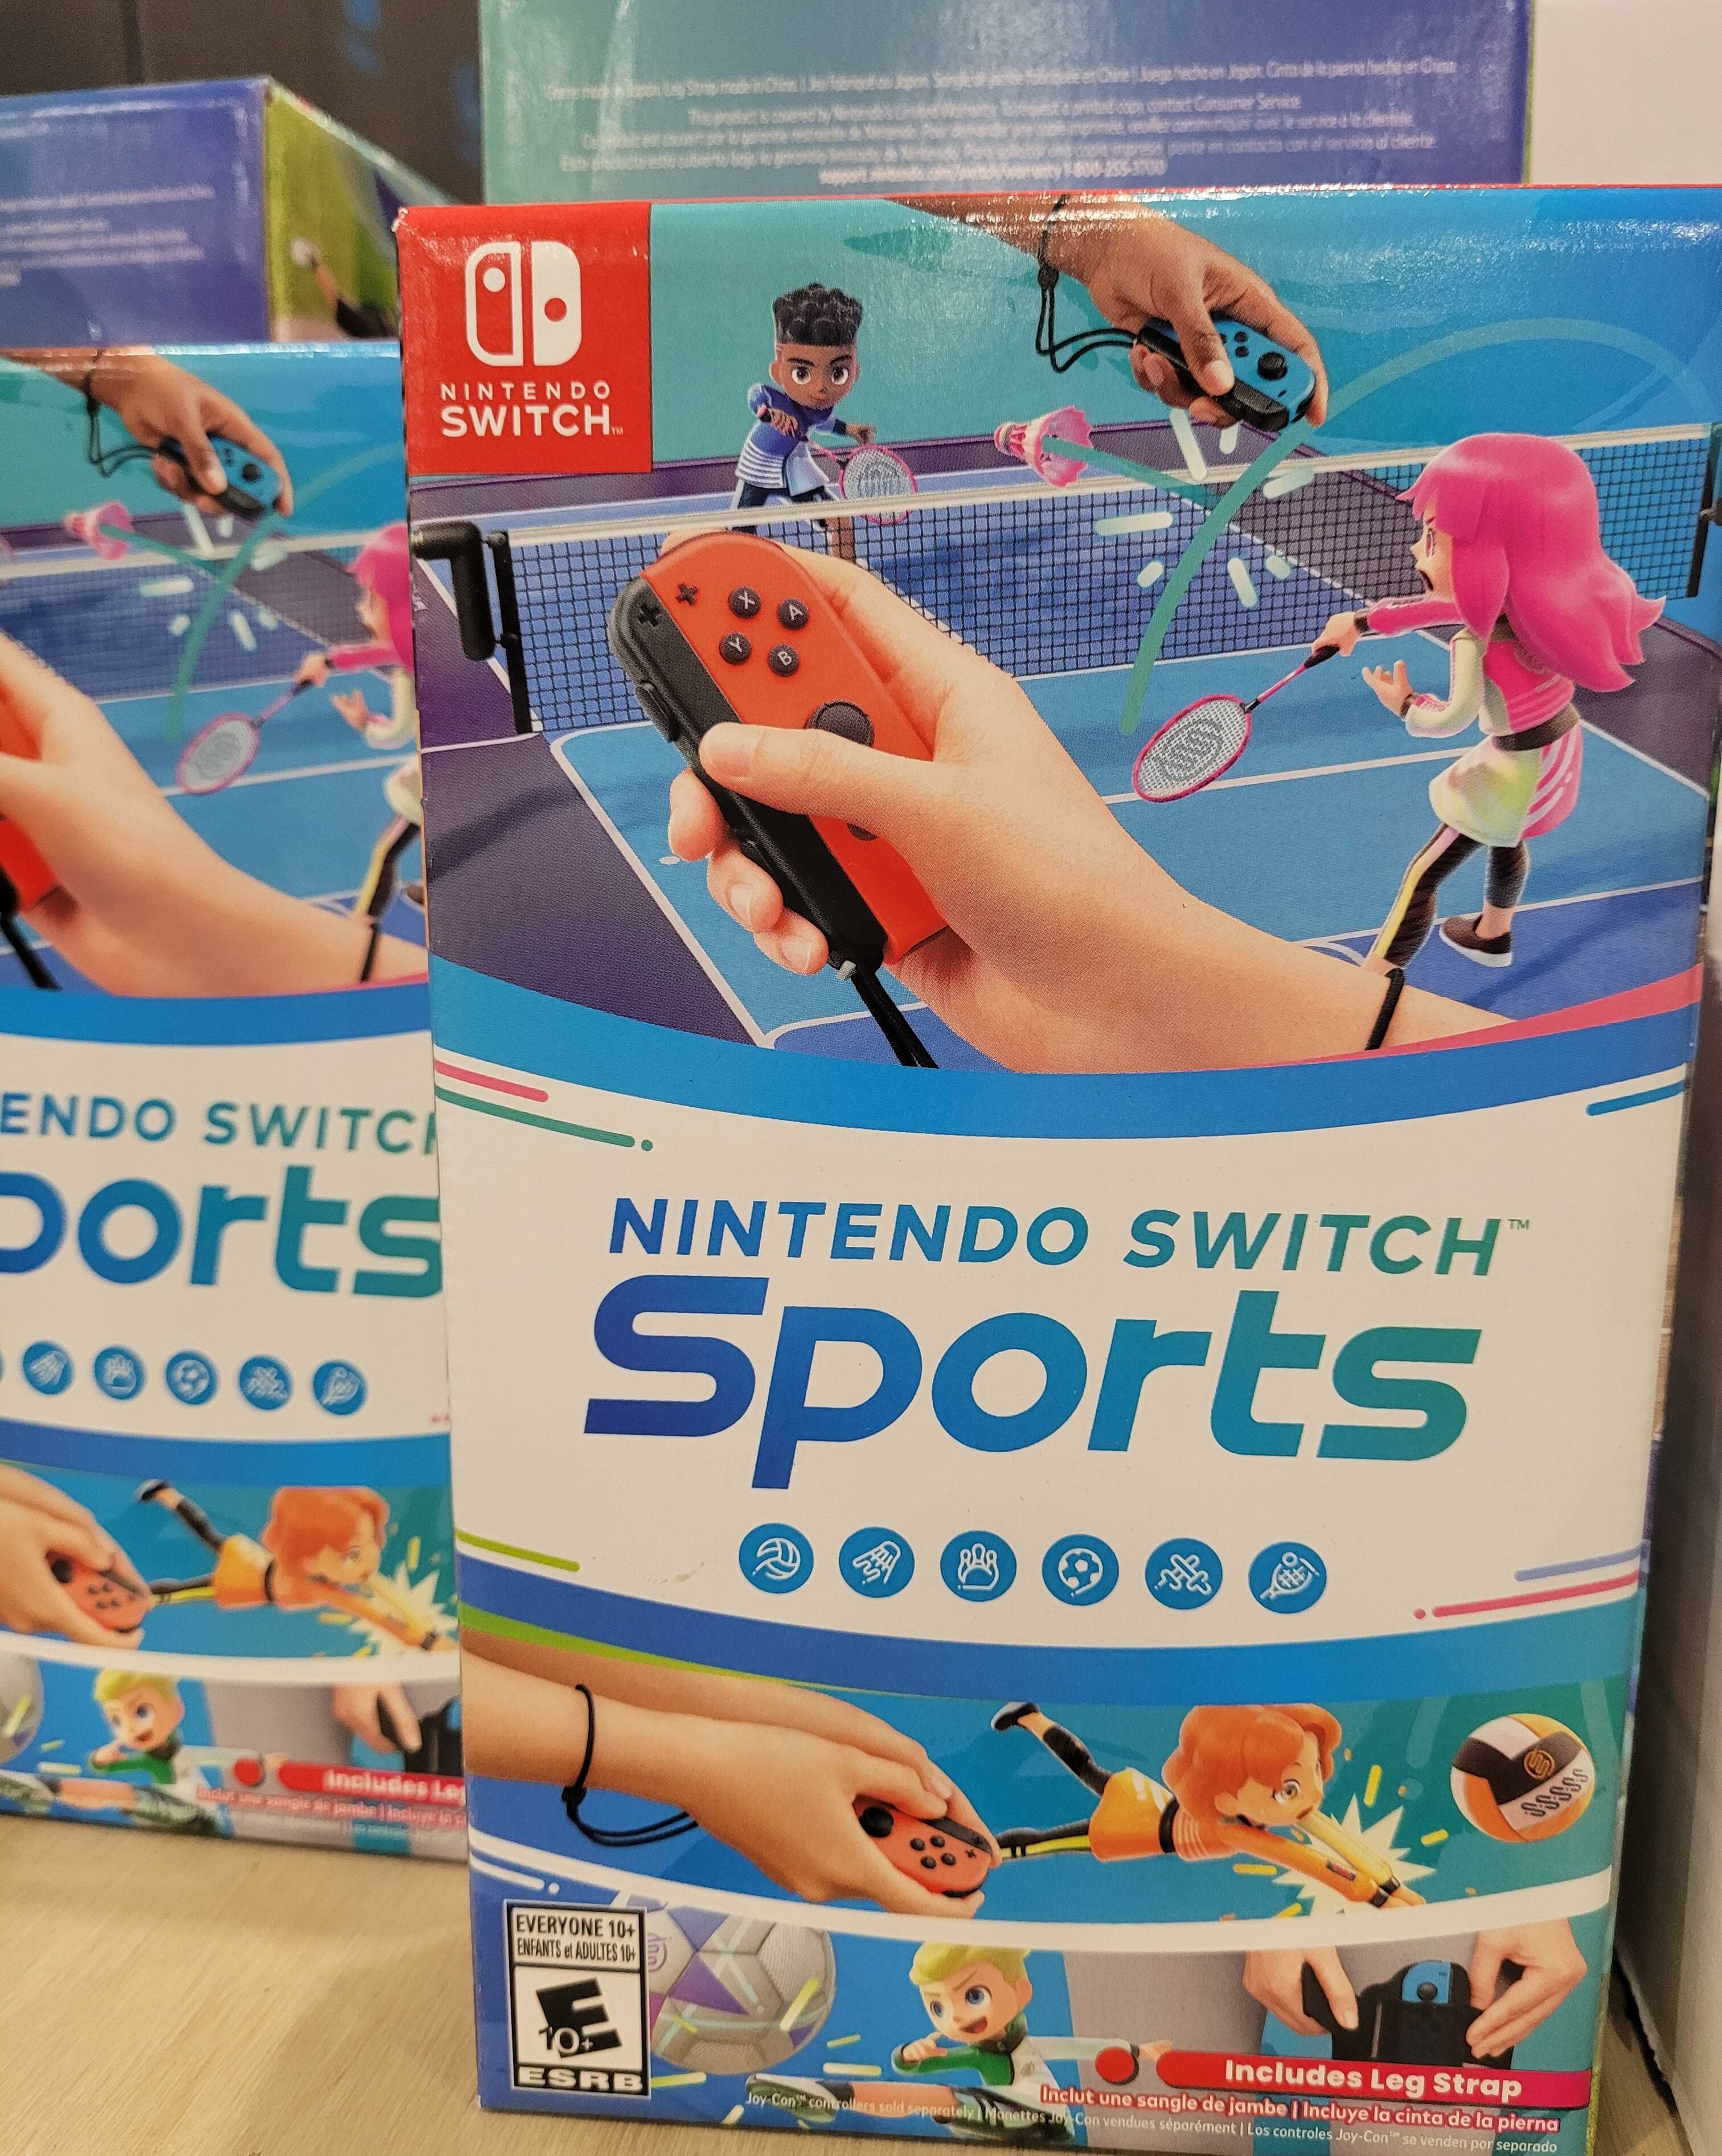 Costco] Nintendo Switch Sport with leg strap 29.97 - RedFlagDeals.com Forums